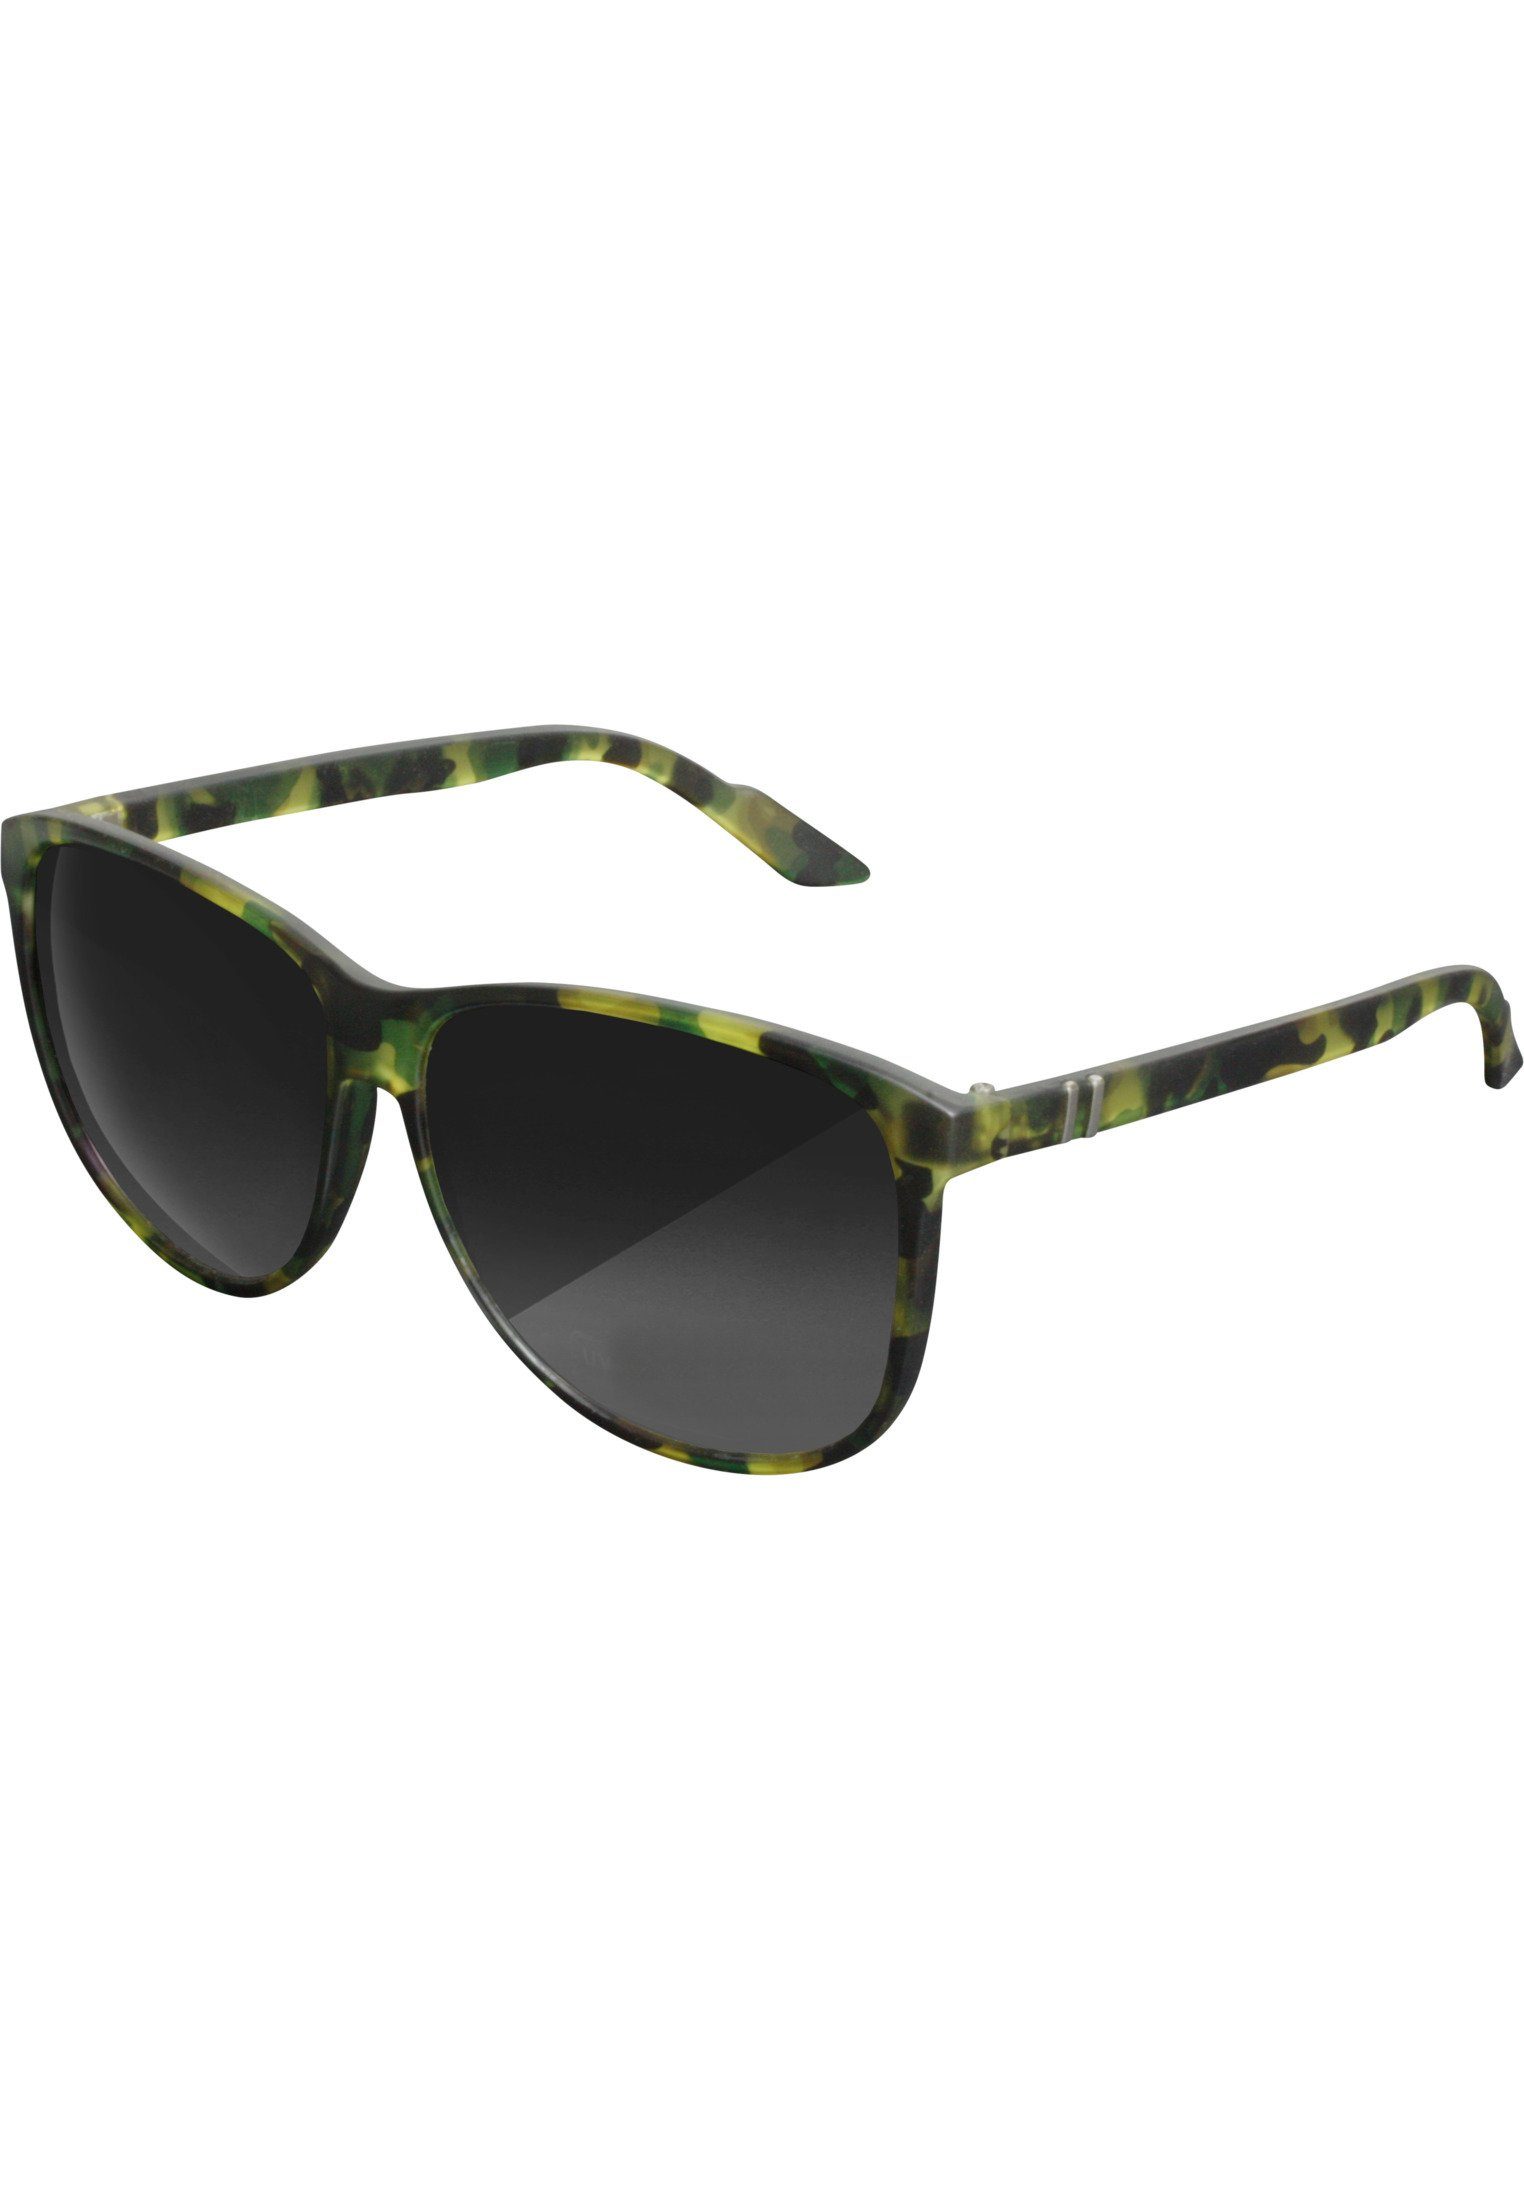 MSTRDS Sonnenbrille Accessoires Sunglasses Chirwa camo